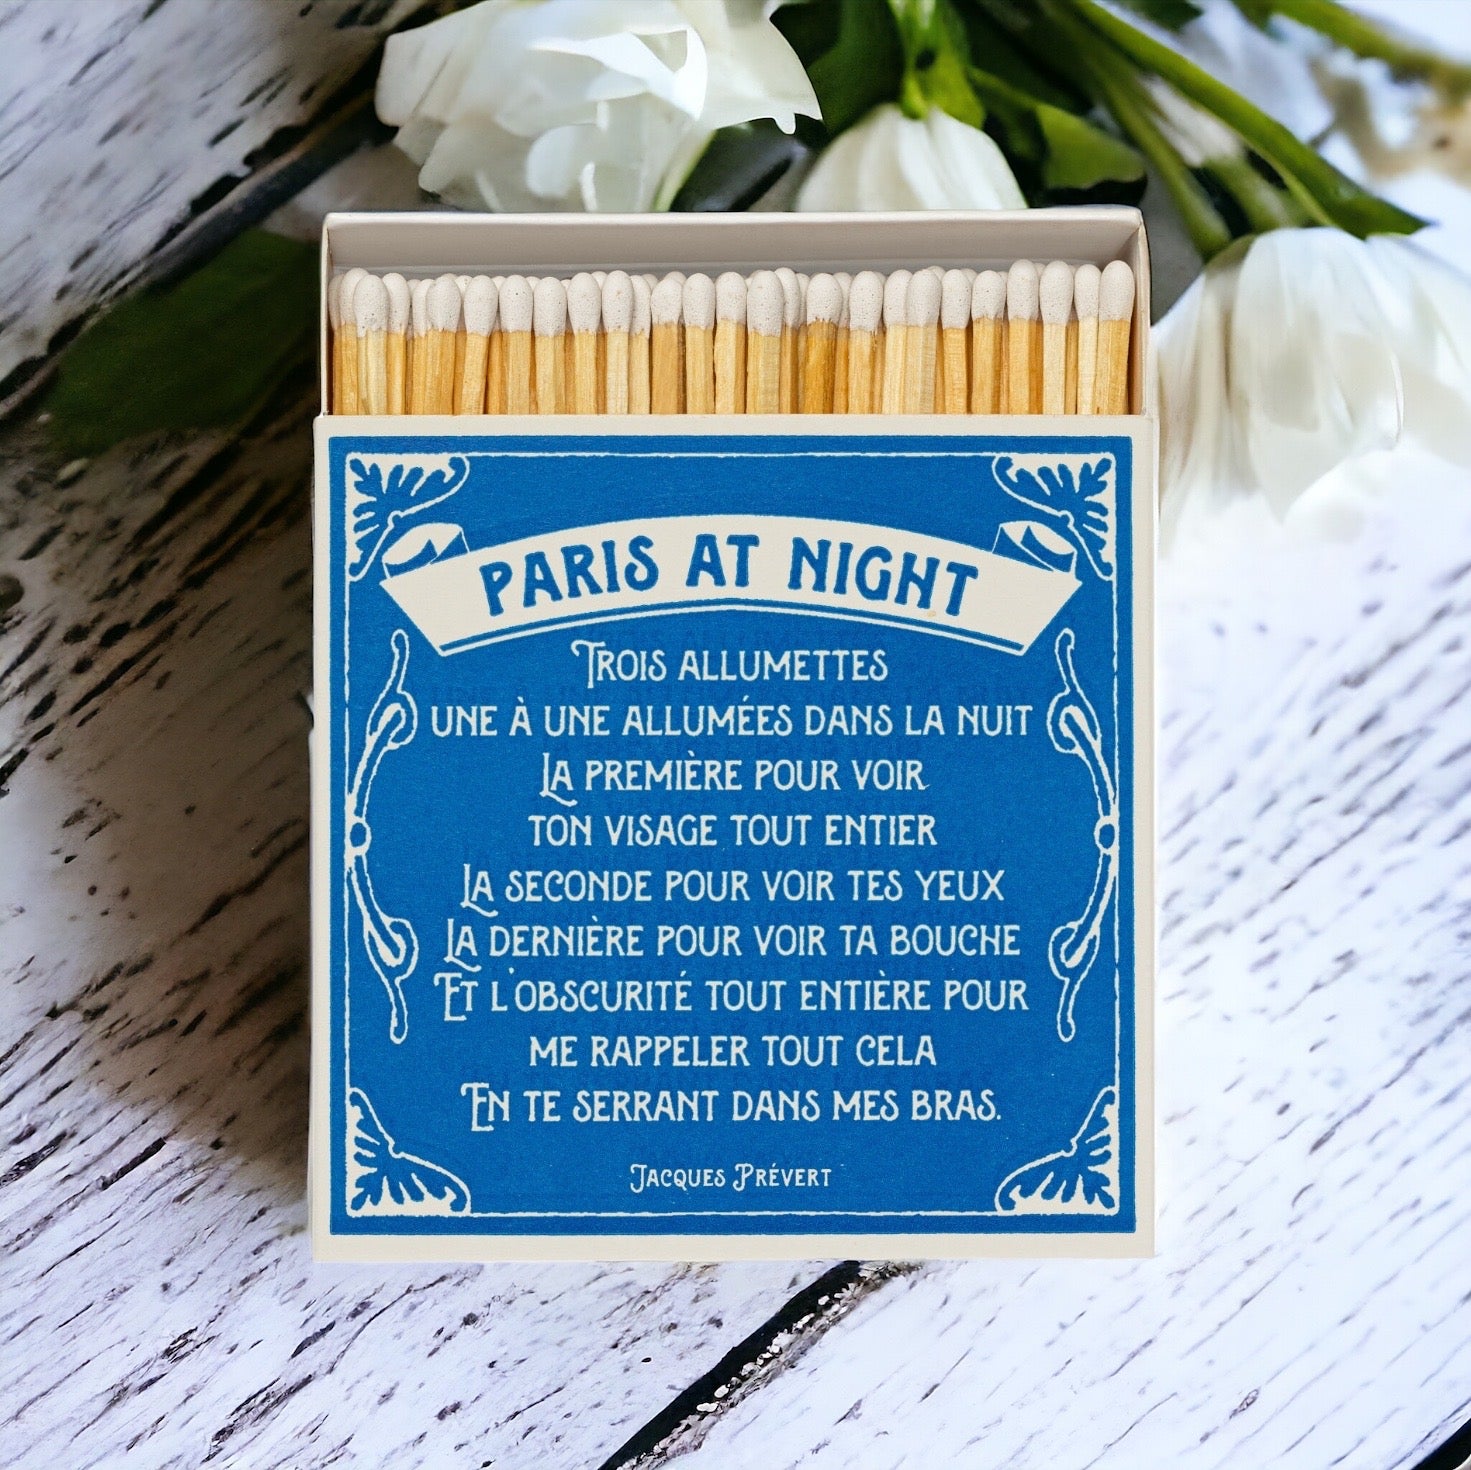 Fiammiferi Giant Matches - PARIS AT NIGHT